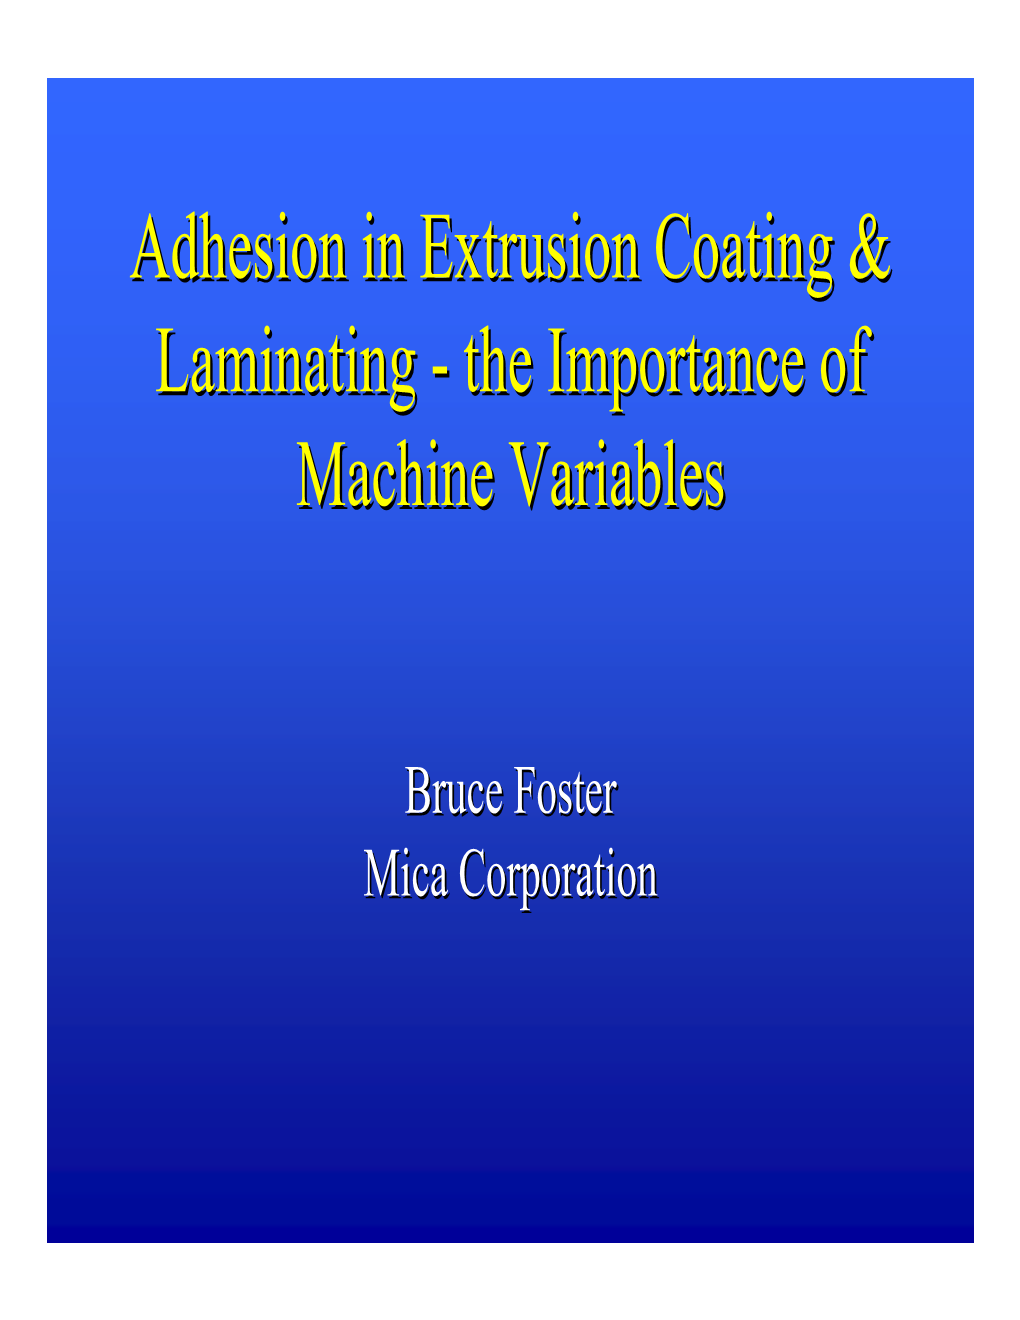 Adhesion in Extrusion Coating & Laminating